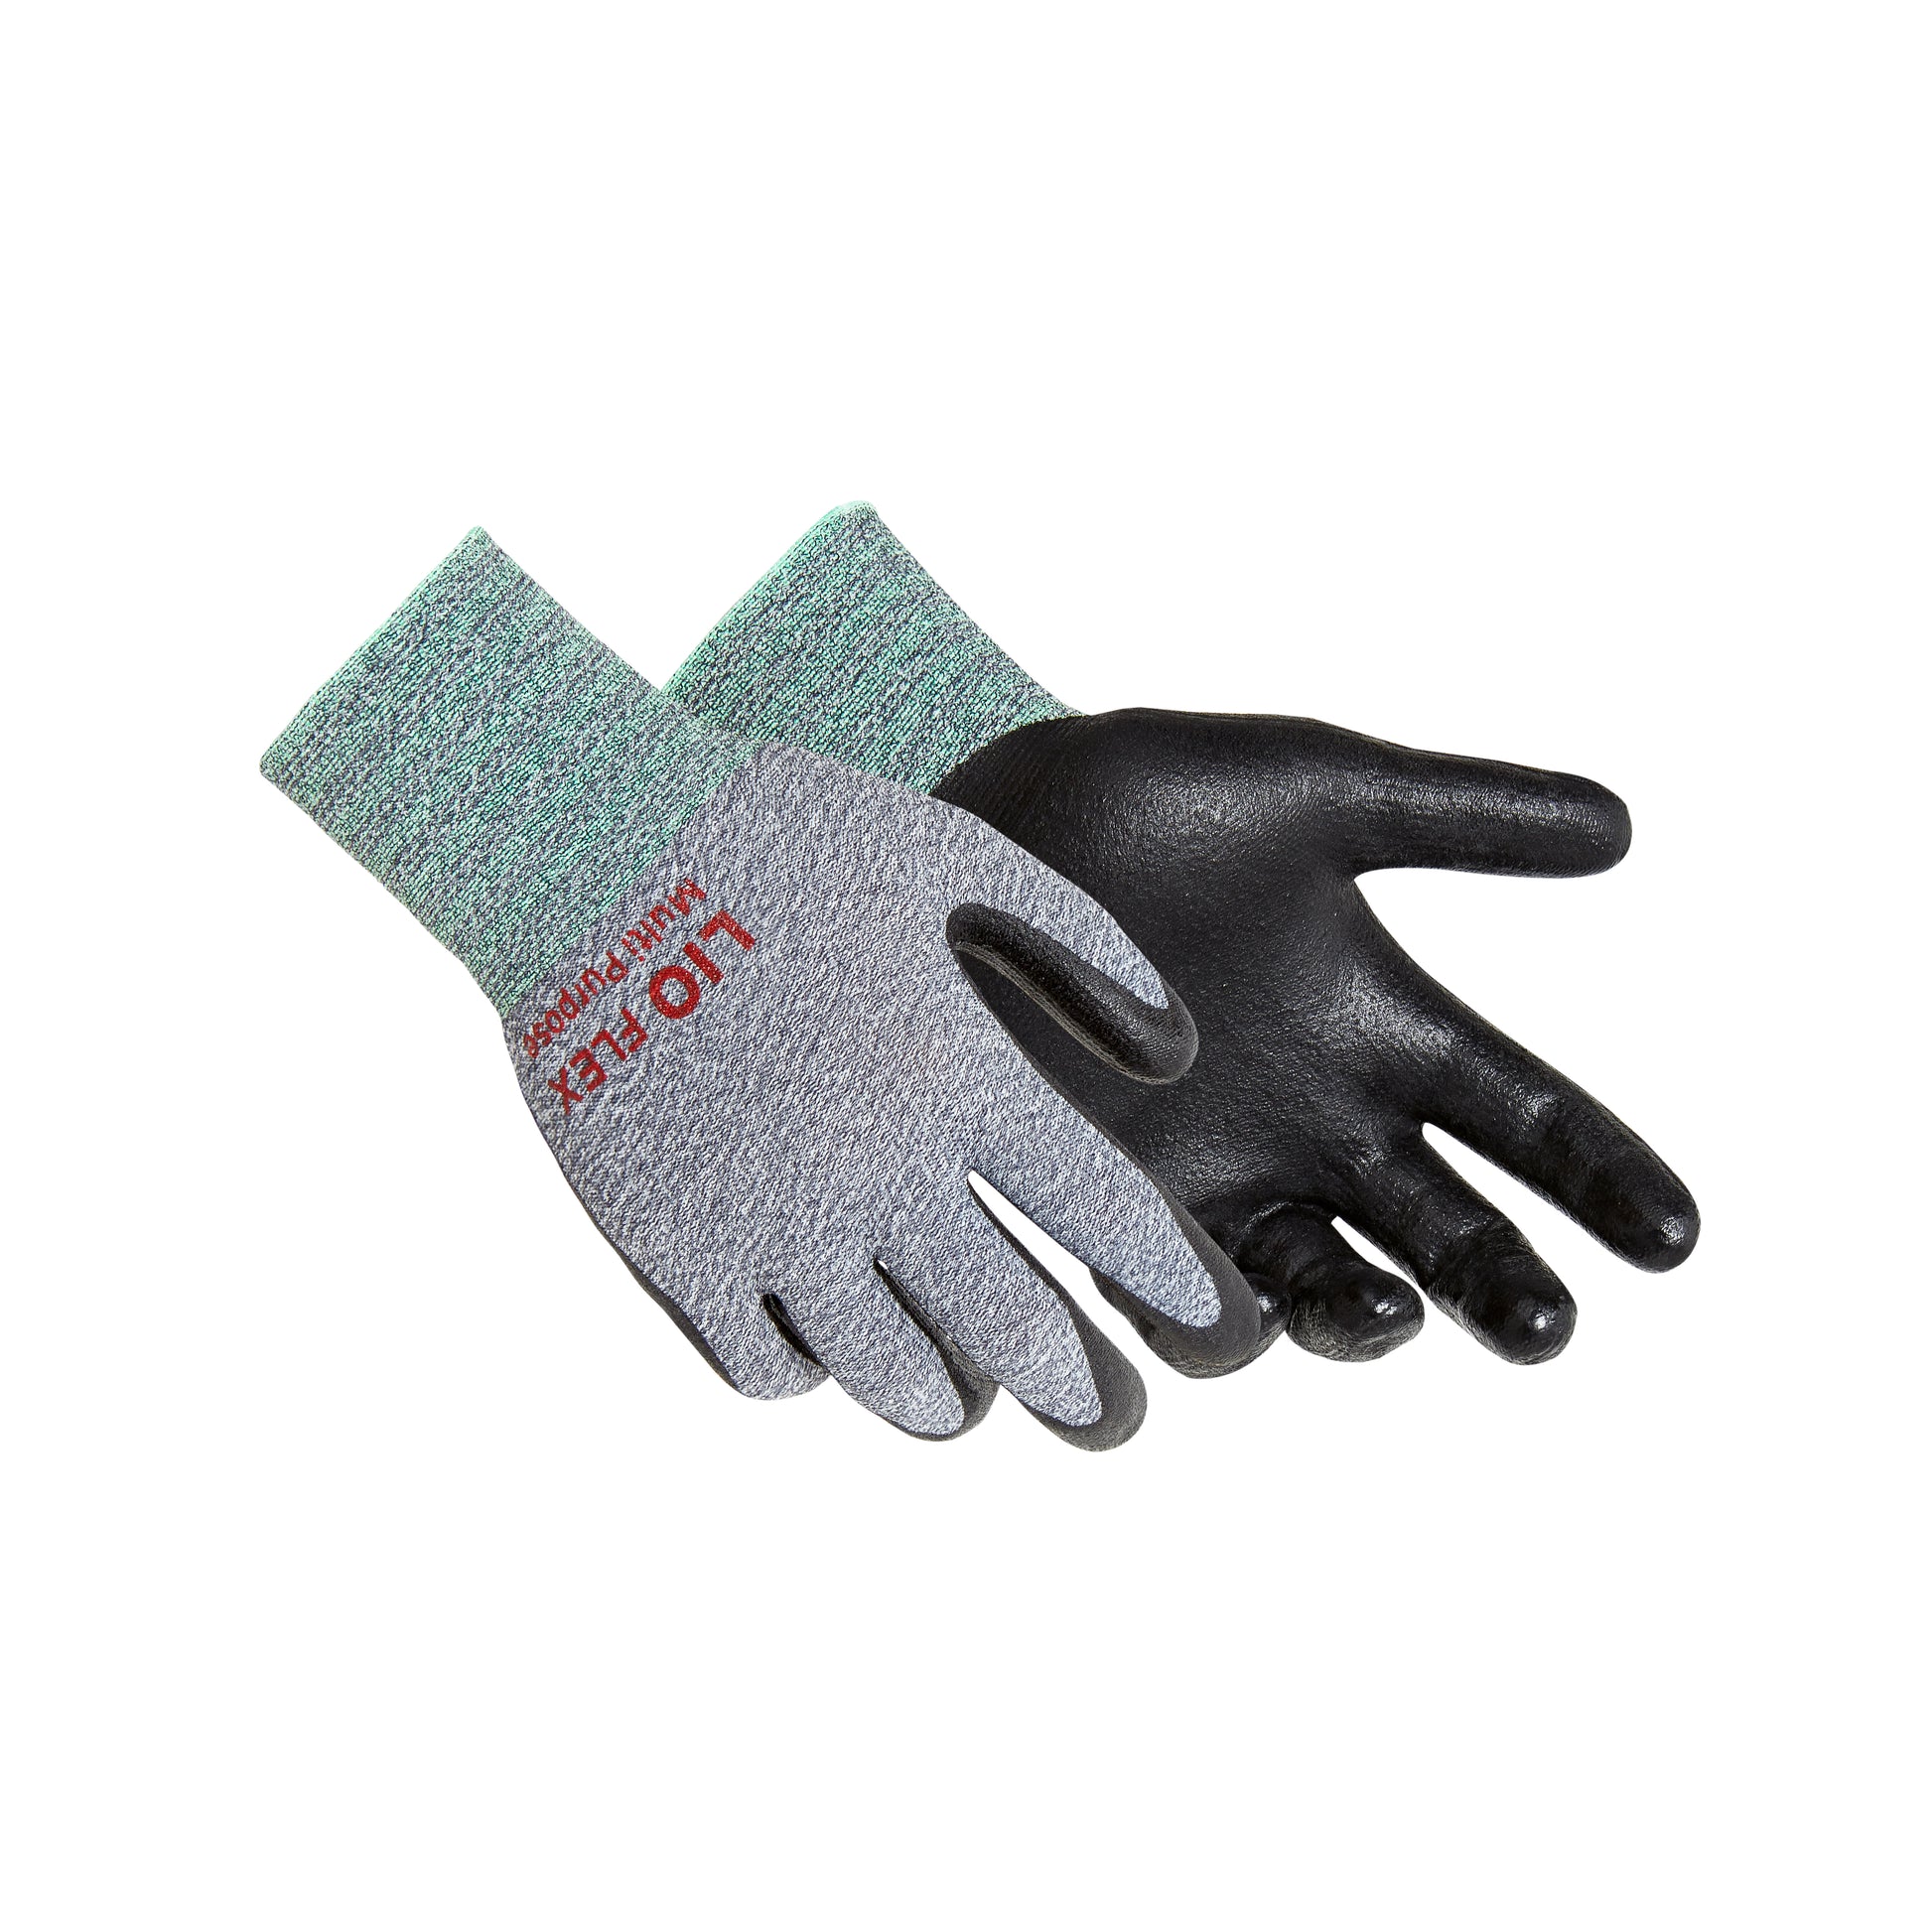 Lio Flex Touch Screen Gloves - 3 Pairs, Work Gloves Men & Women, Gloves with [10 Touchscreen fingers], Safety Work Gloves for Men & Women, Thin